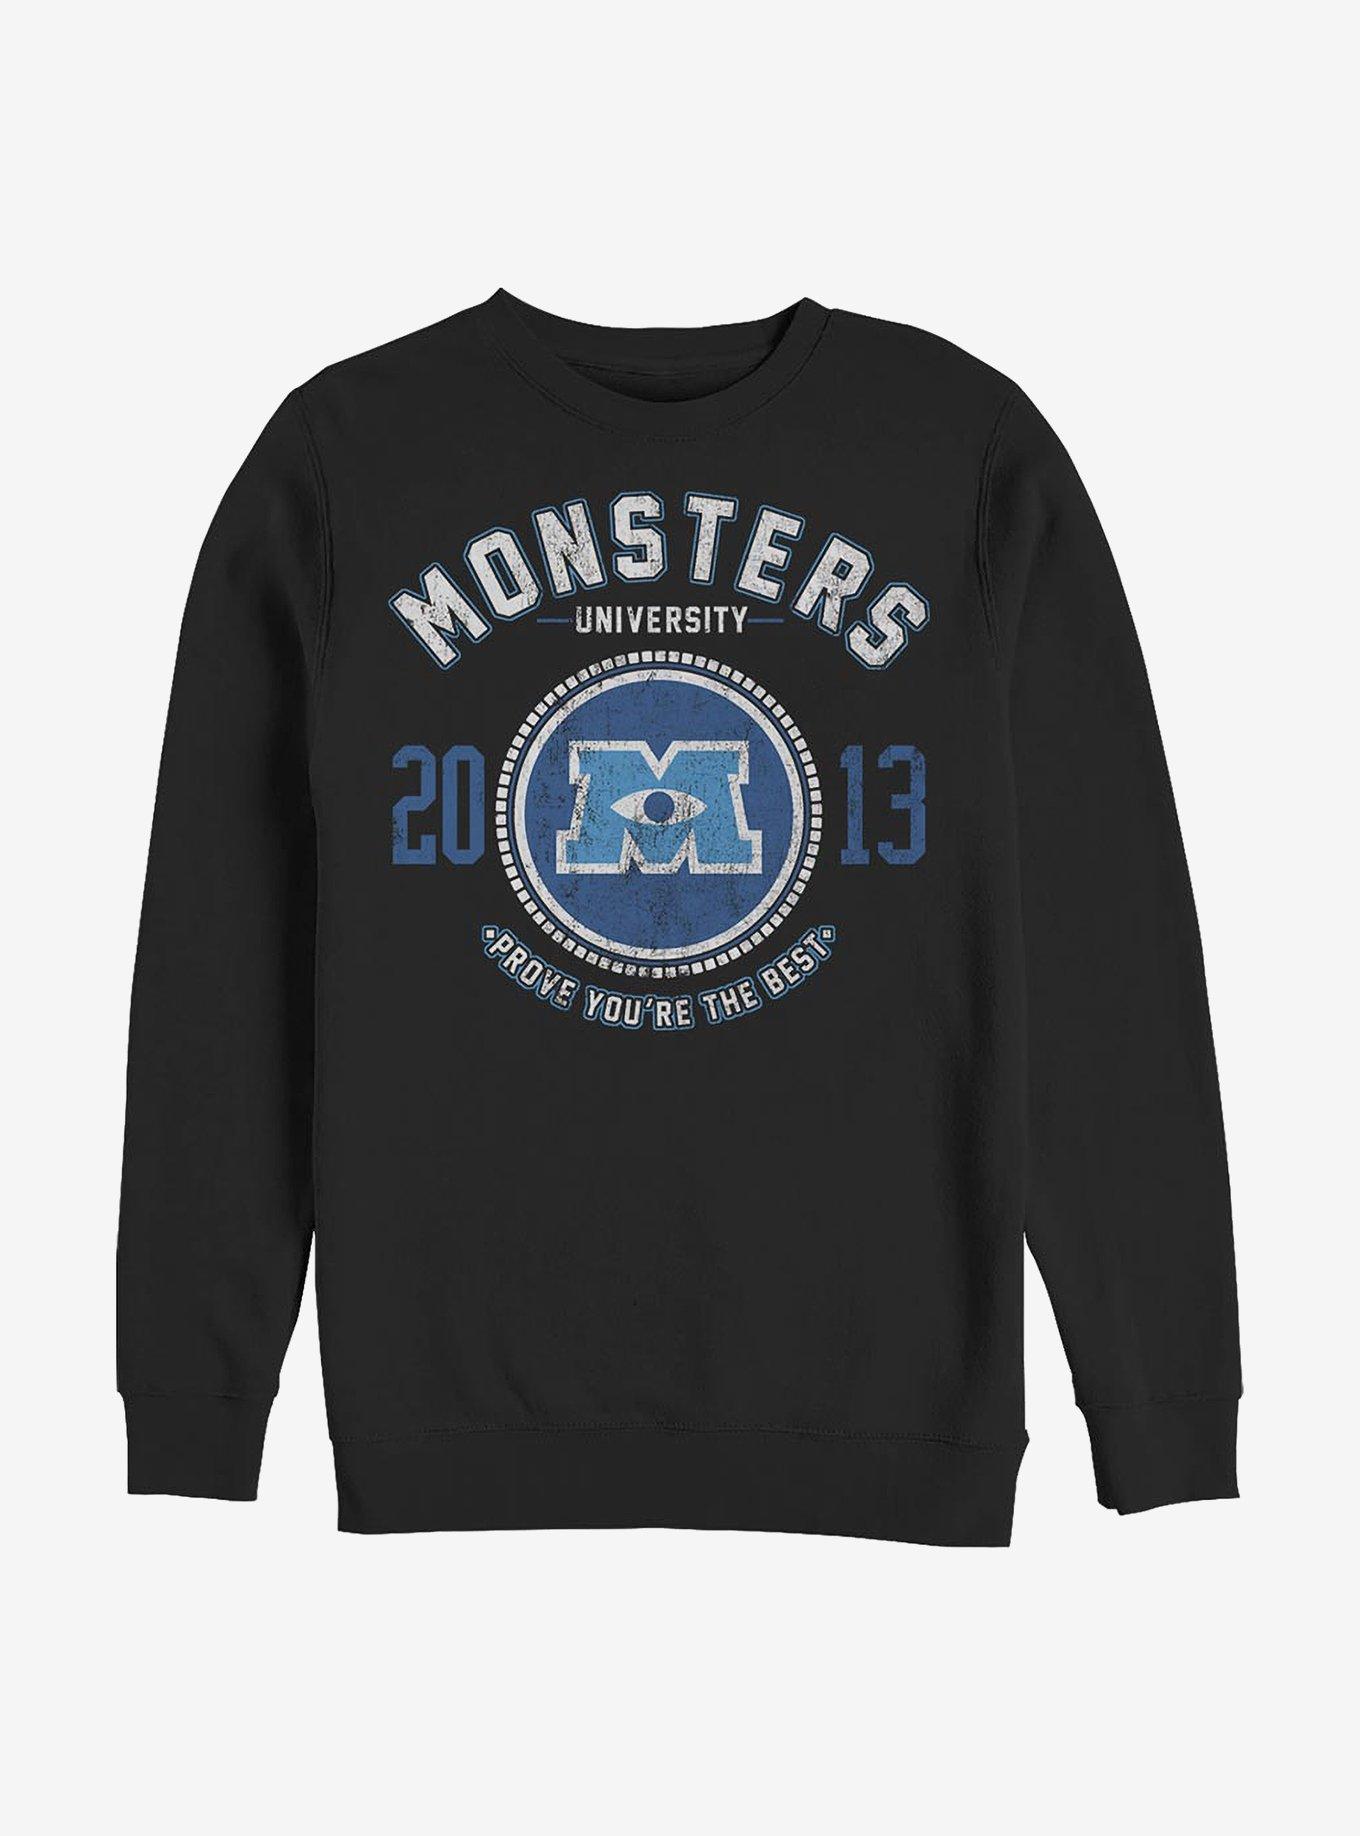 Disney Pixar Monsters University Badge Crew Sweatshirt, BLACK, hi-res